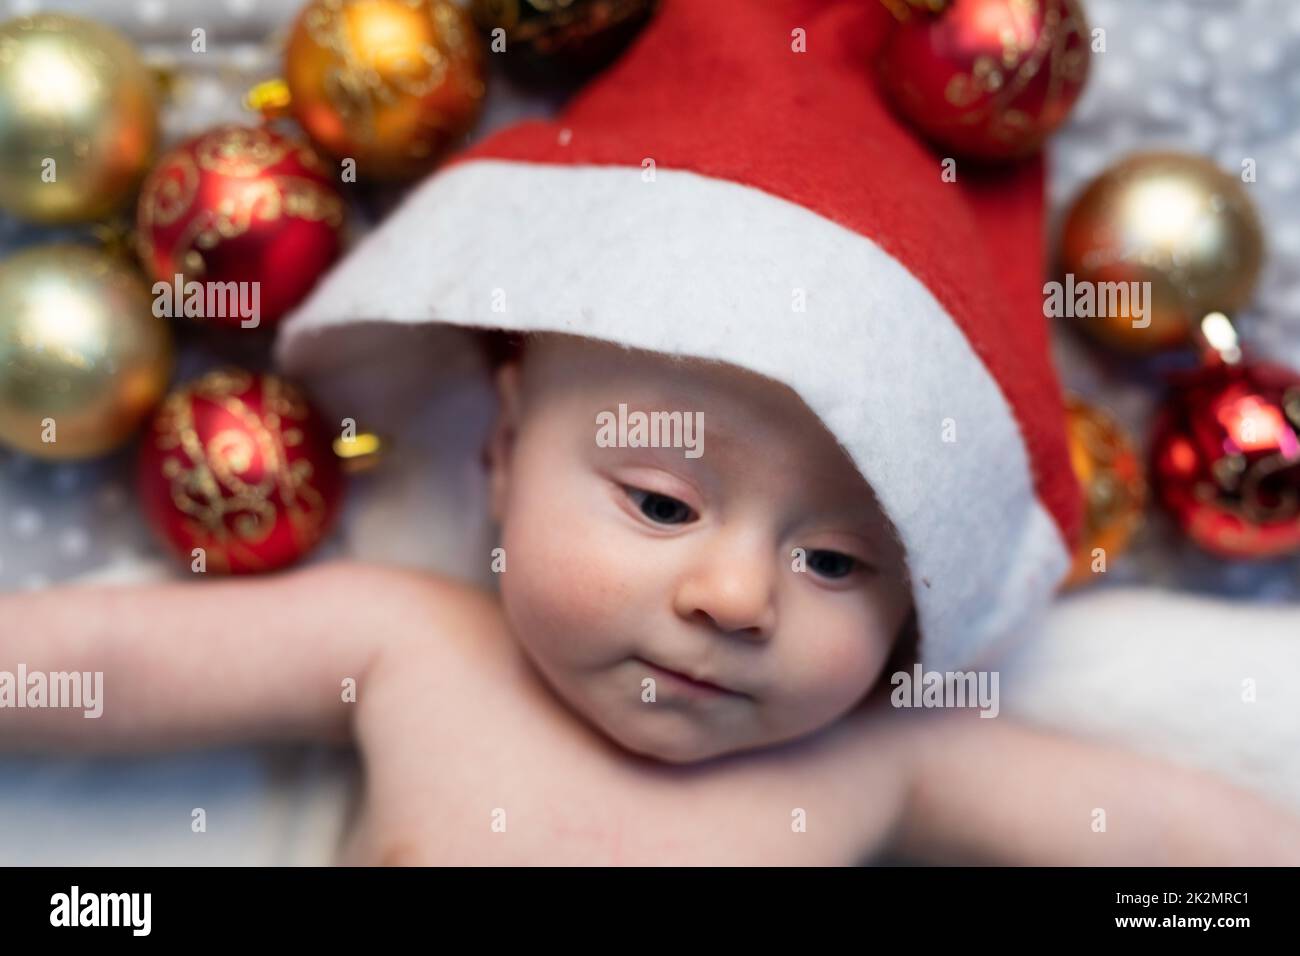 Cute tiny baby wearing a Christmas Santa hat Stock Photo